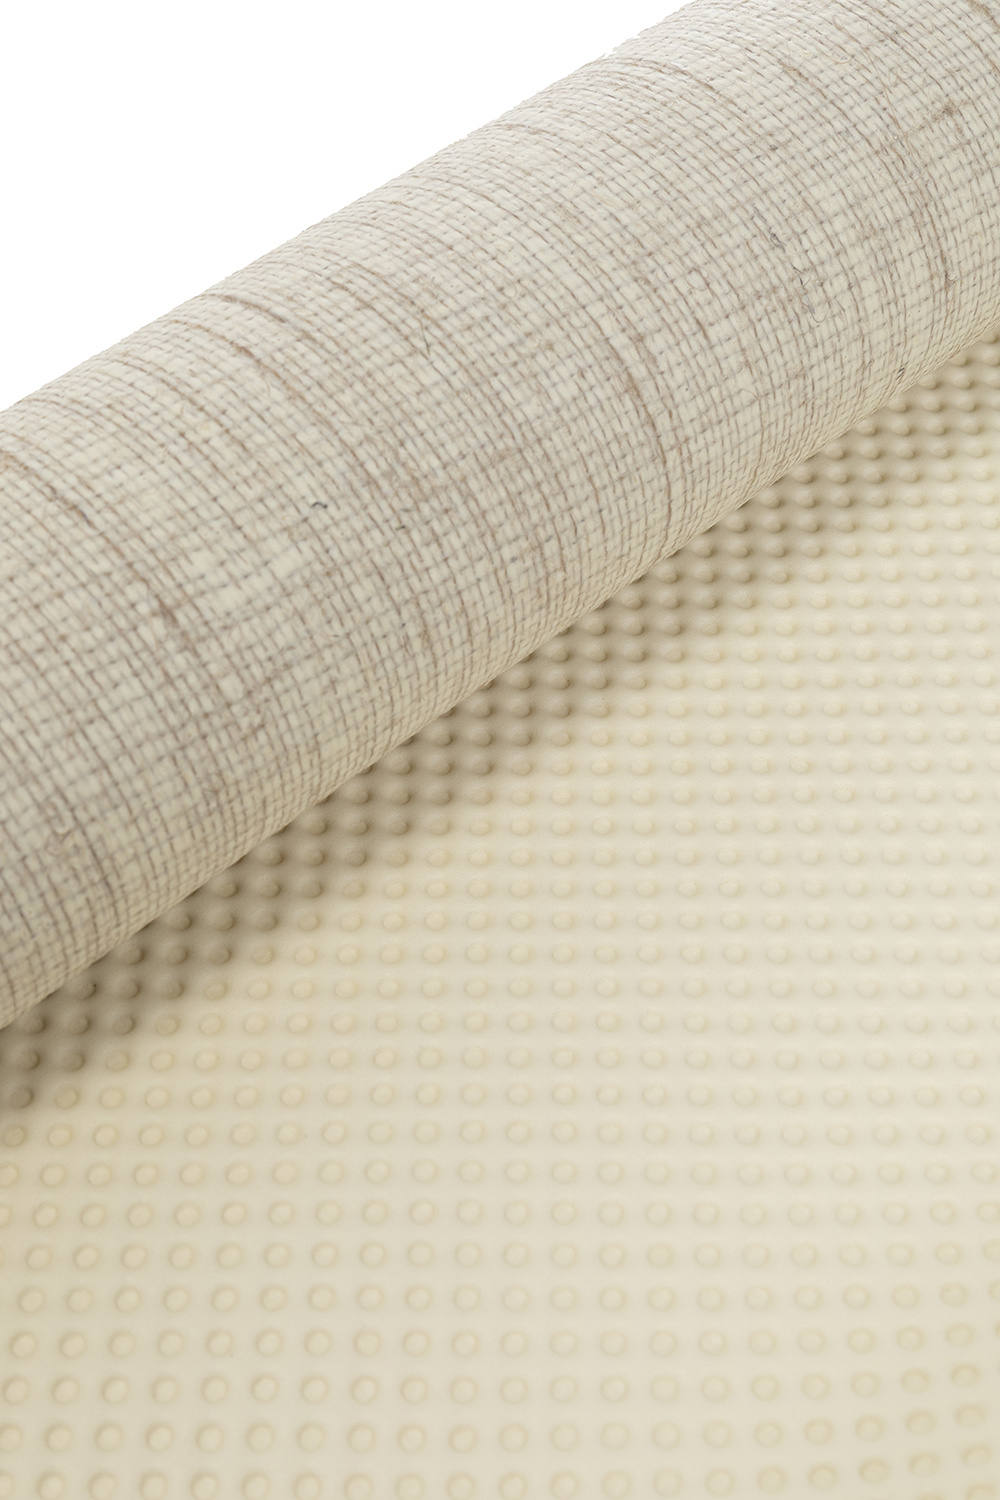 Jil Sander abstract-print knitted blanket - Yoga mat JIL SANDER+ -  IetpShops Japan